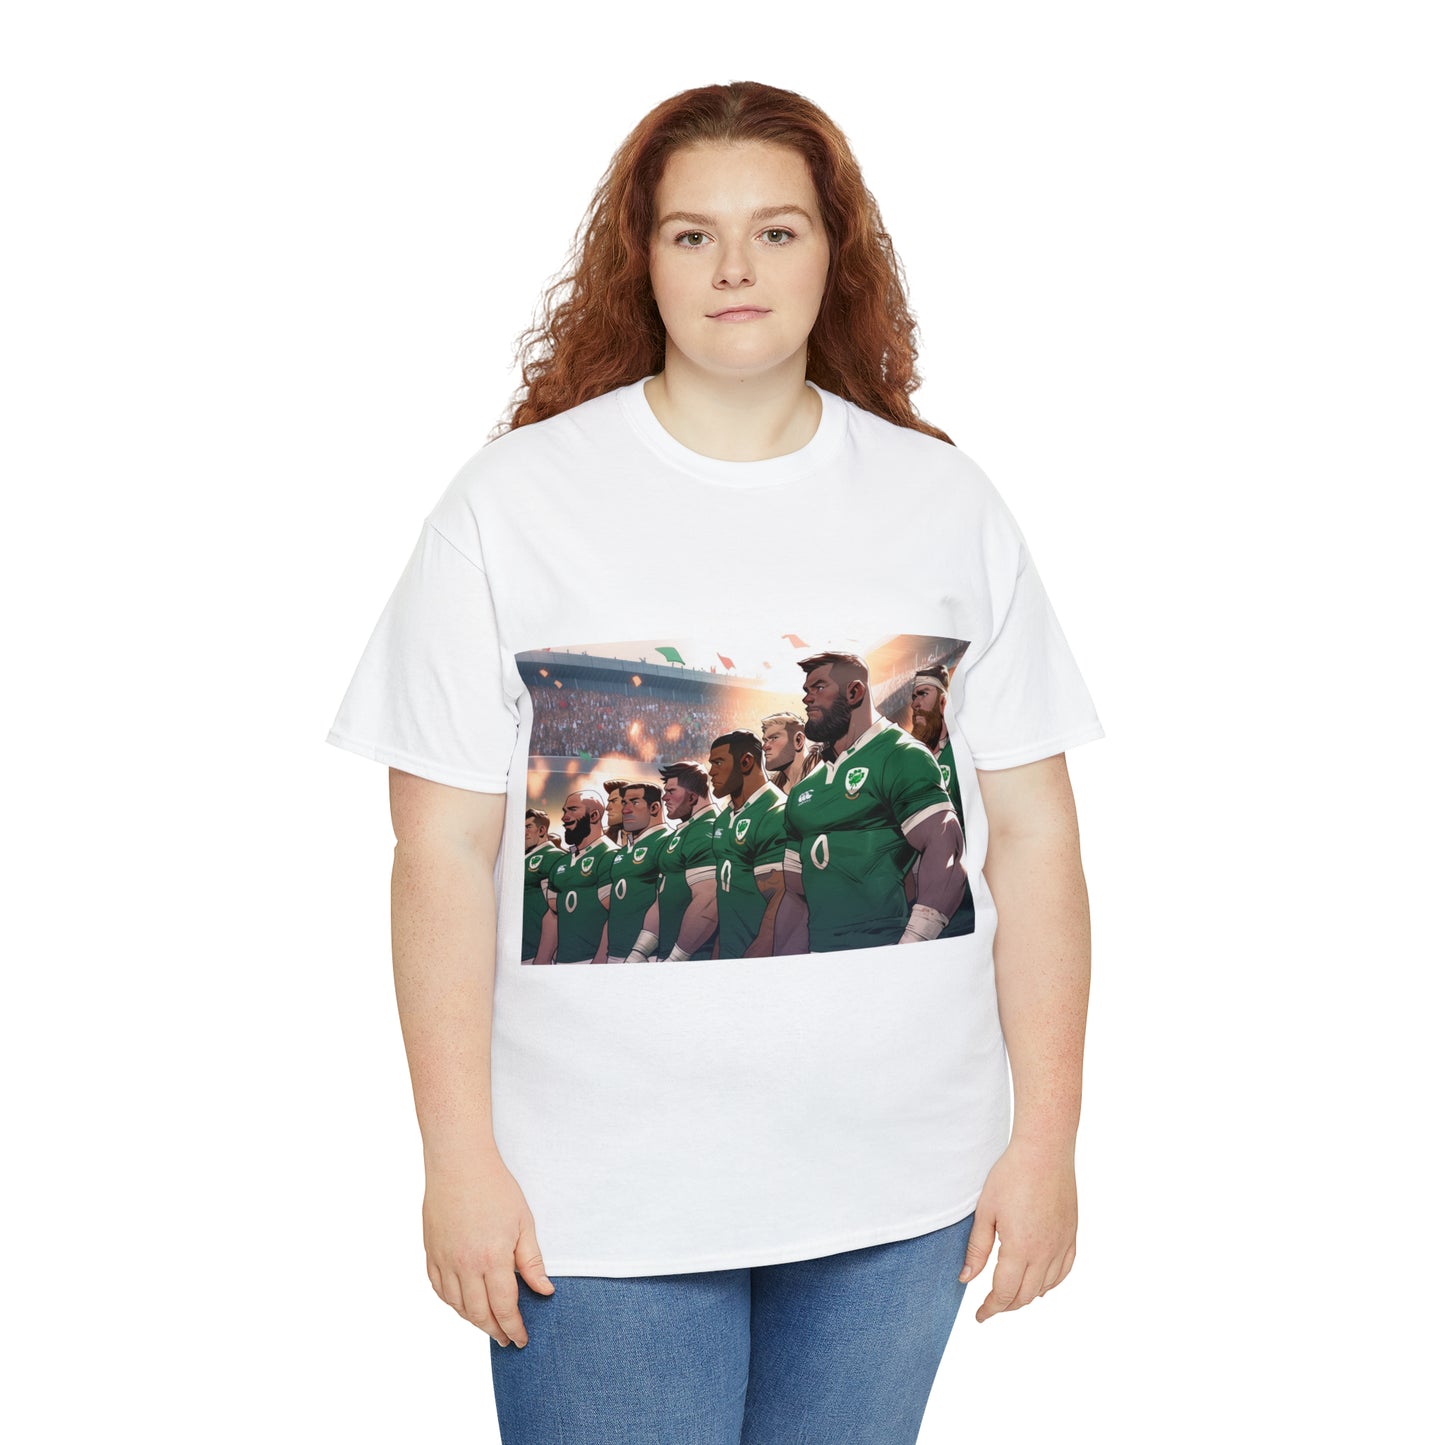 Ready Ireland - light shirts